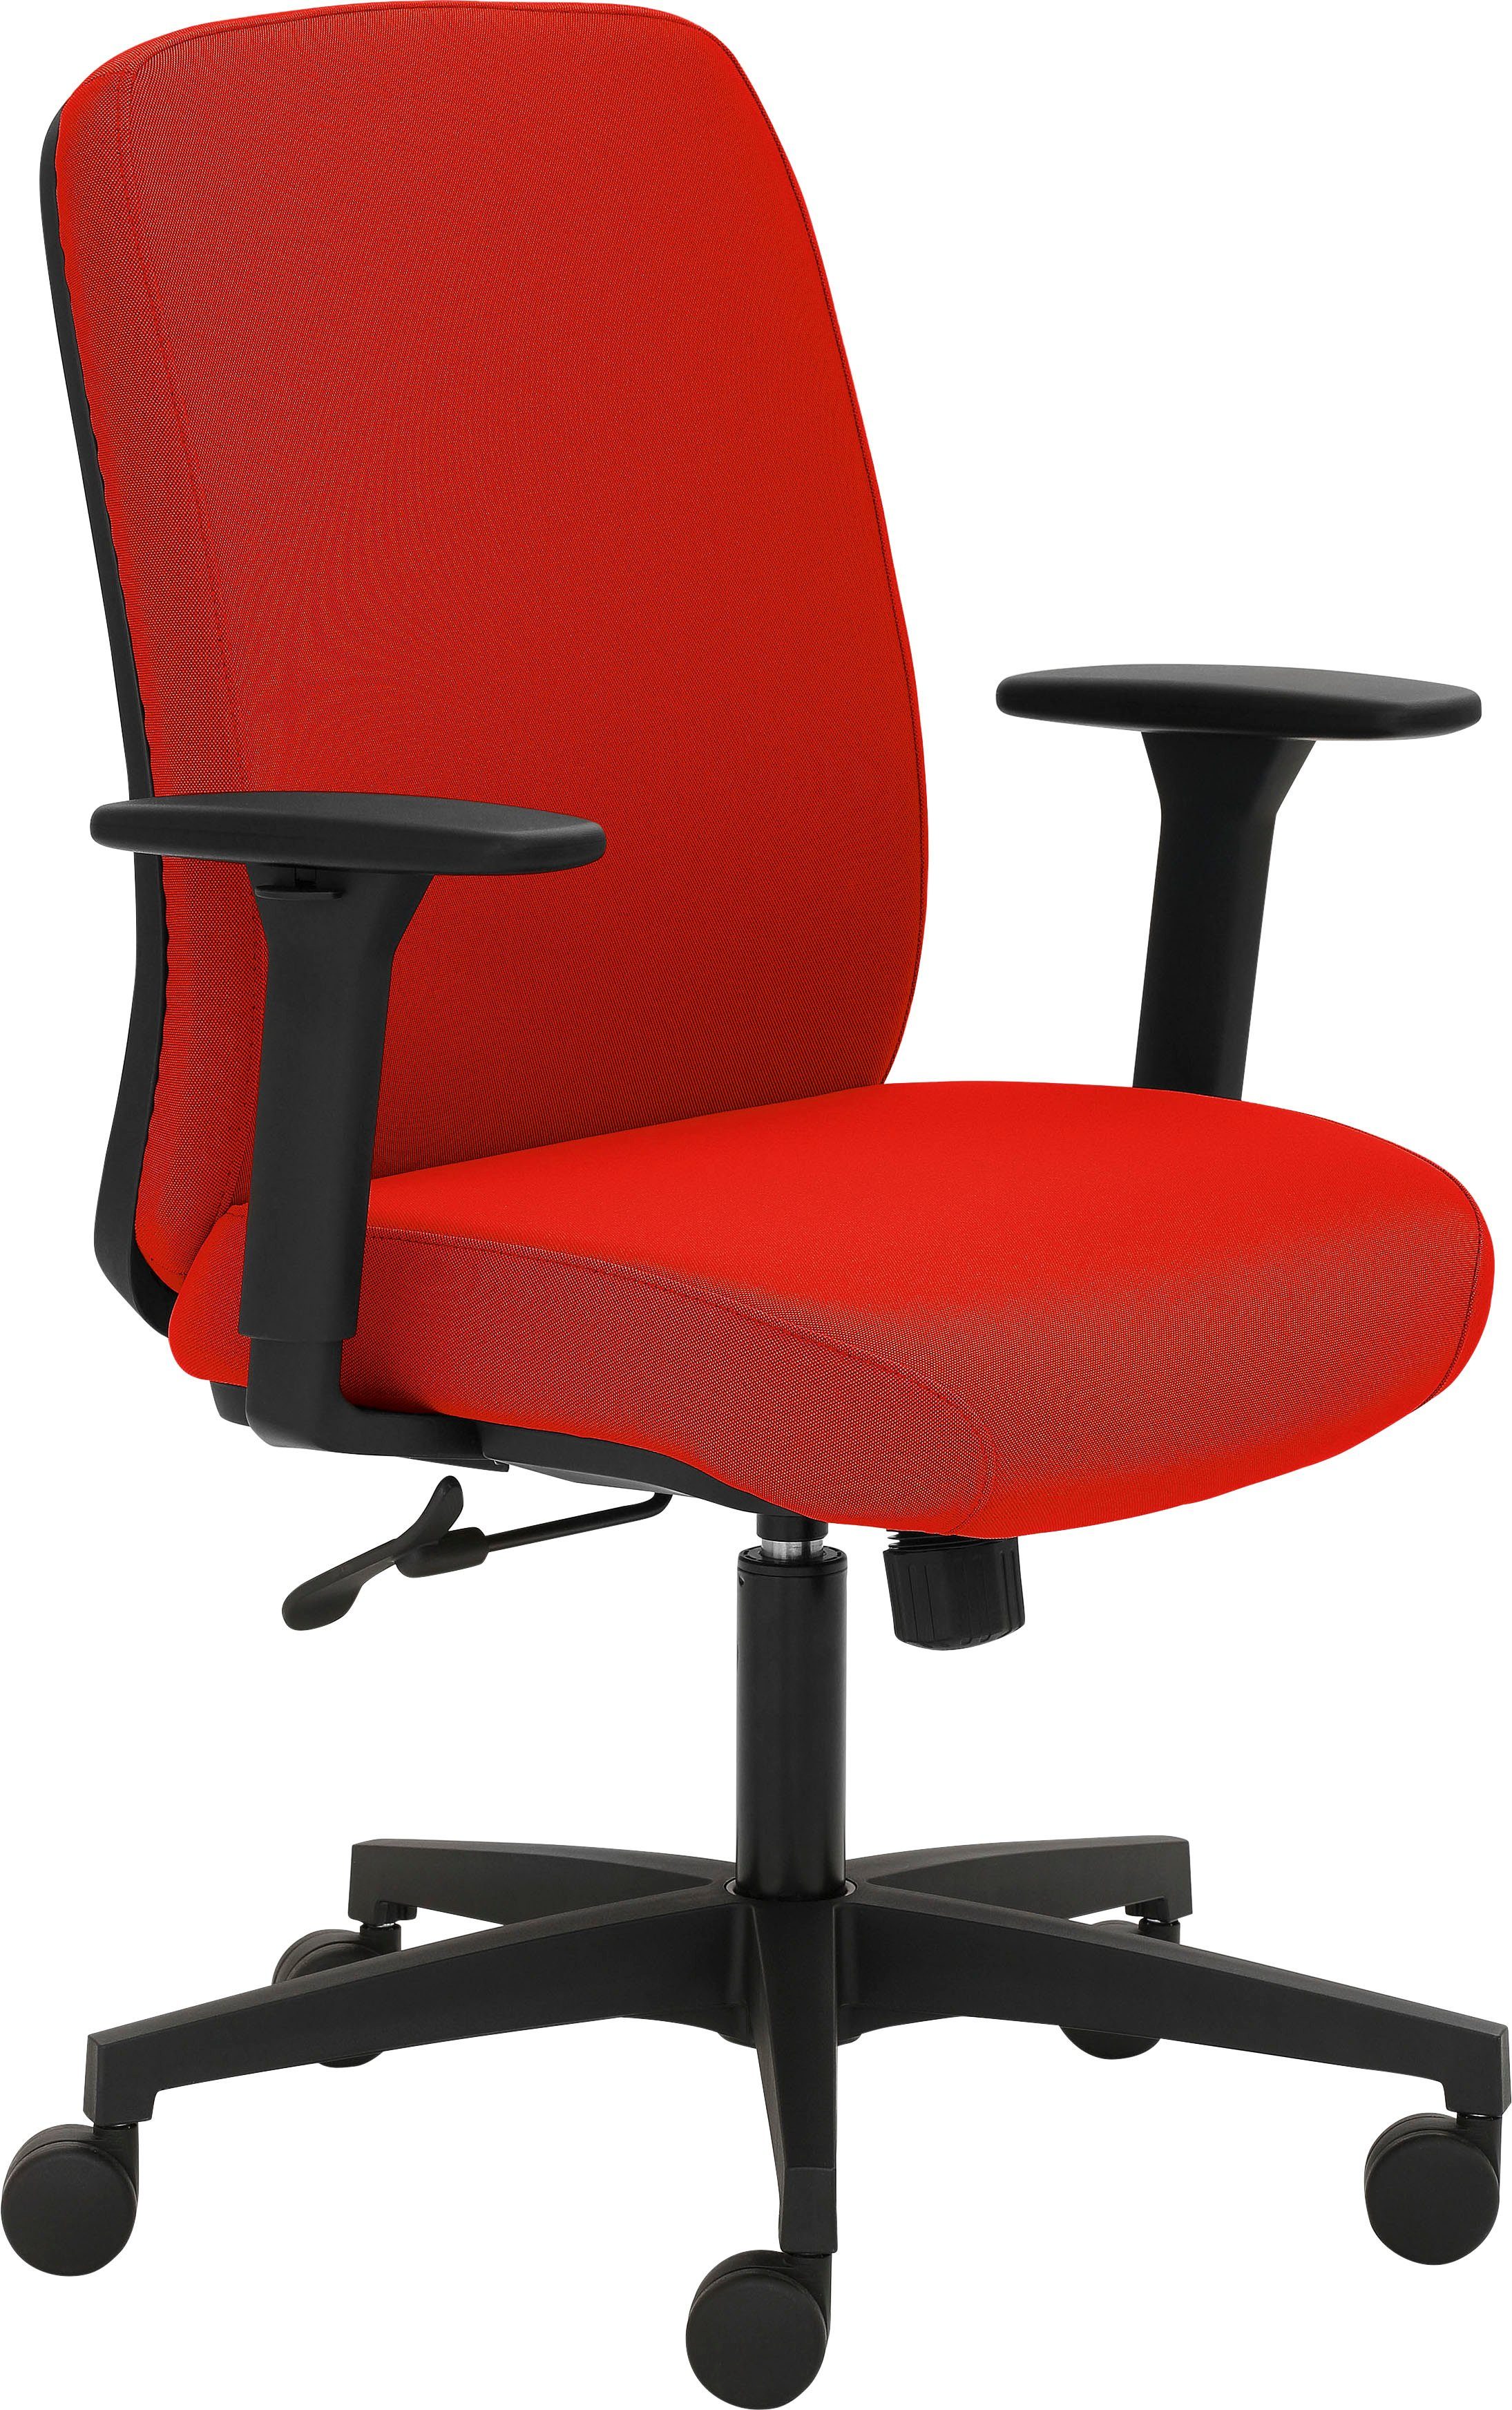 Drehstuhl 2219, Sitzmöbel maximalen extra | für starke GS-zertifiziert, Kirschrot Polsterung Sitzkomfort Kirschrot Mayer